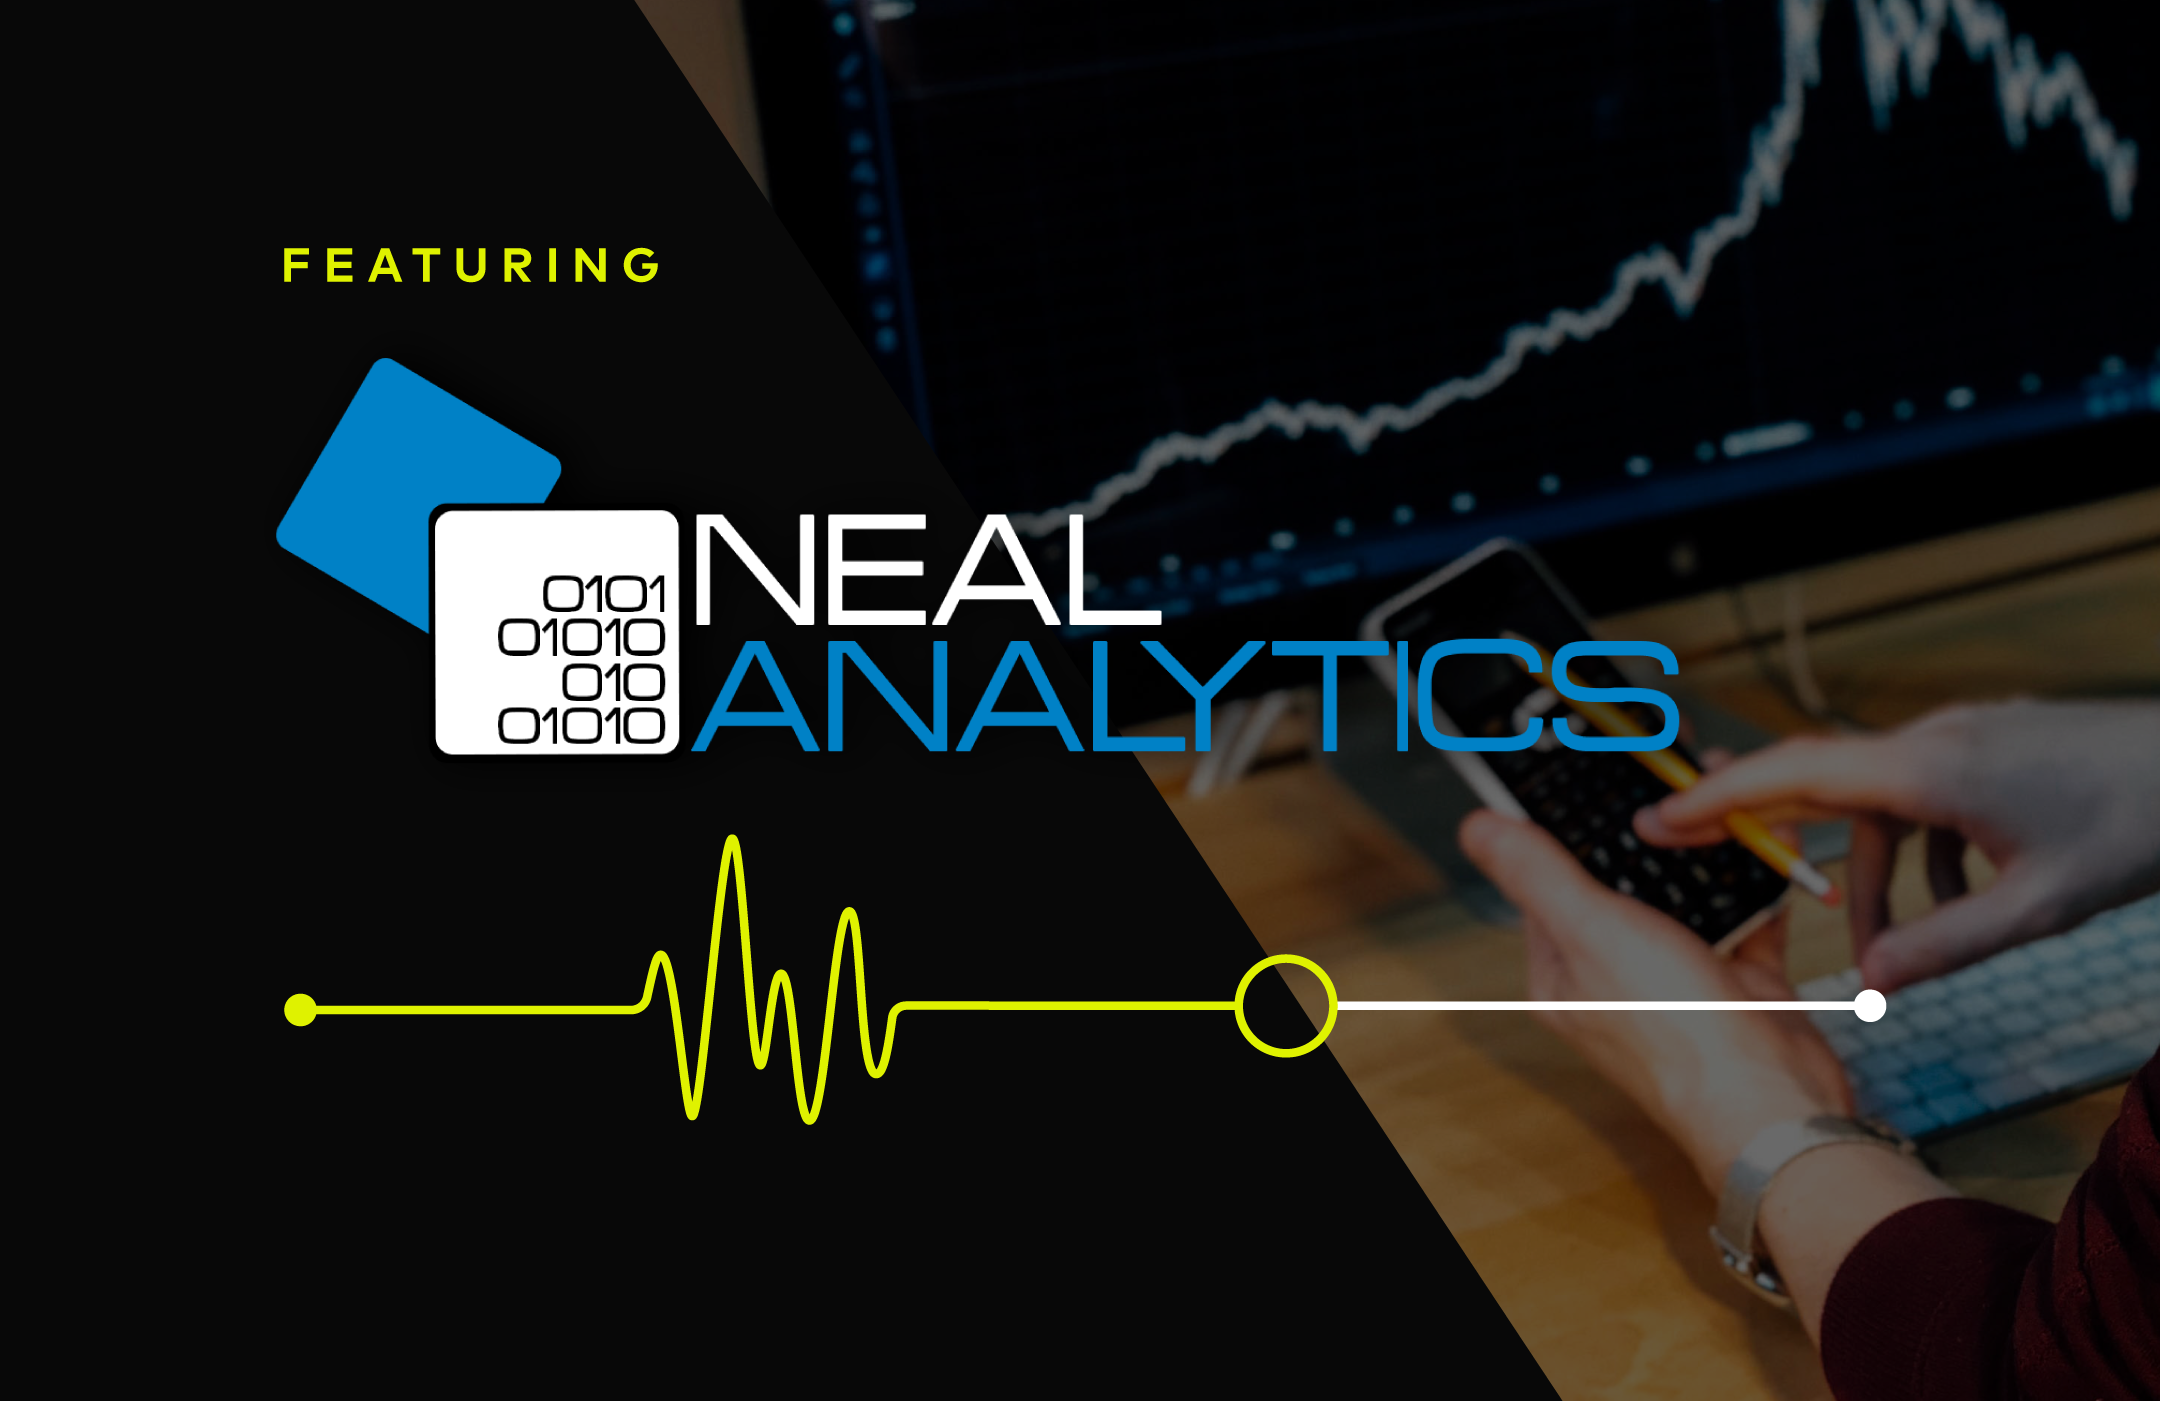 Featuring Neal Analytics